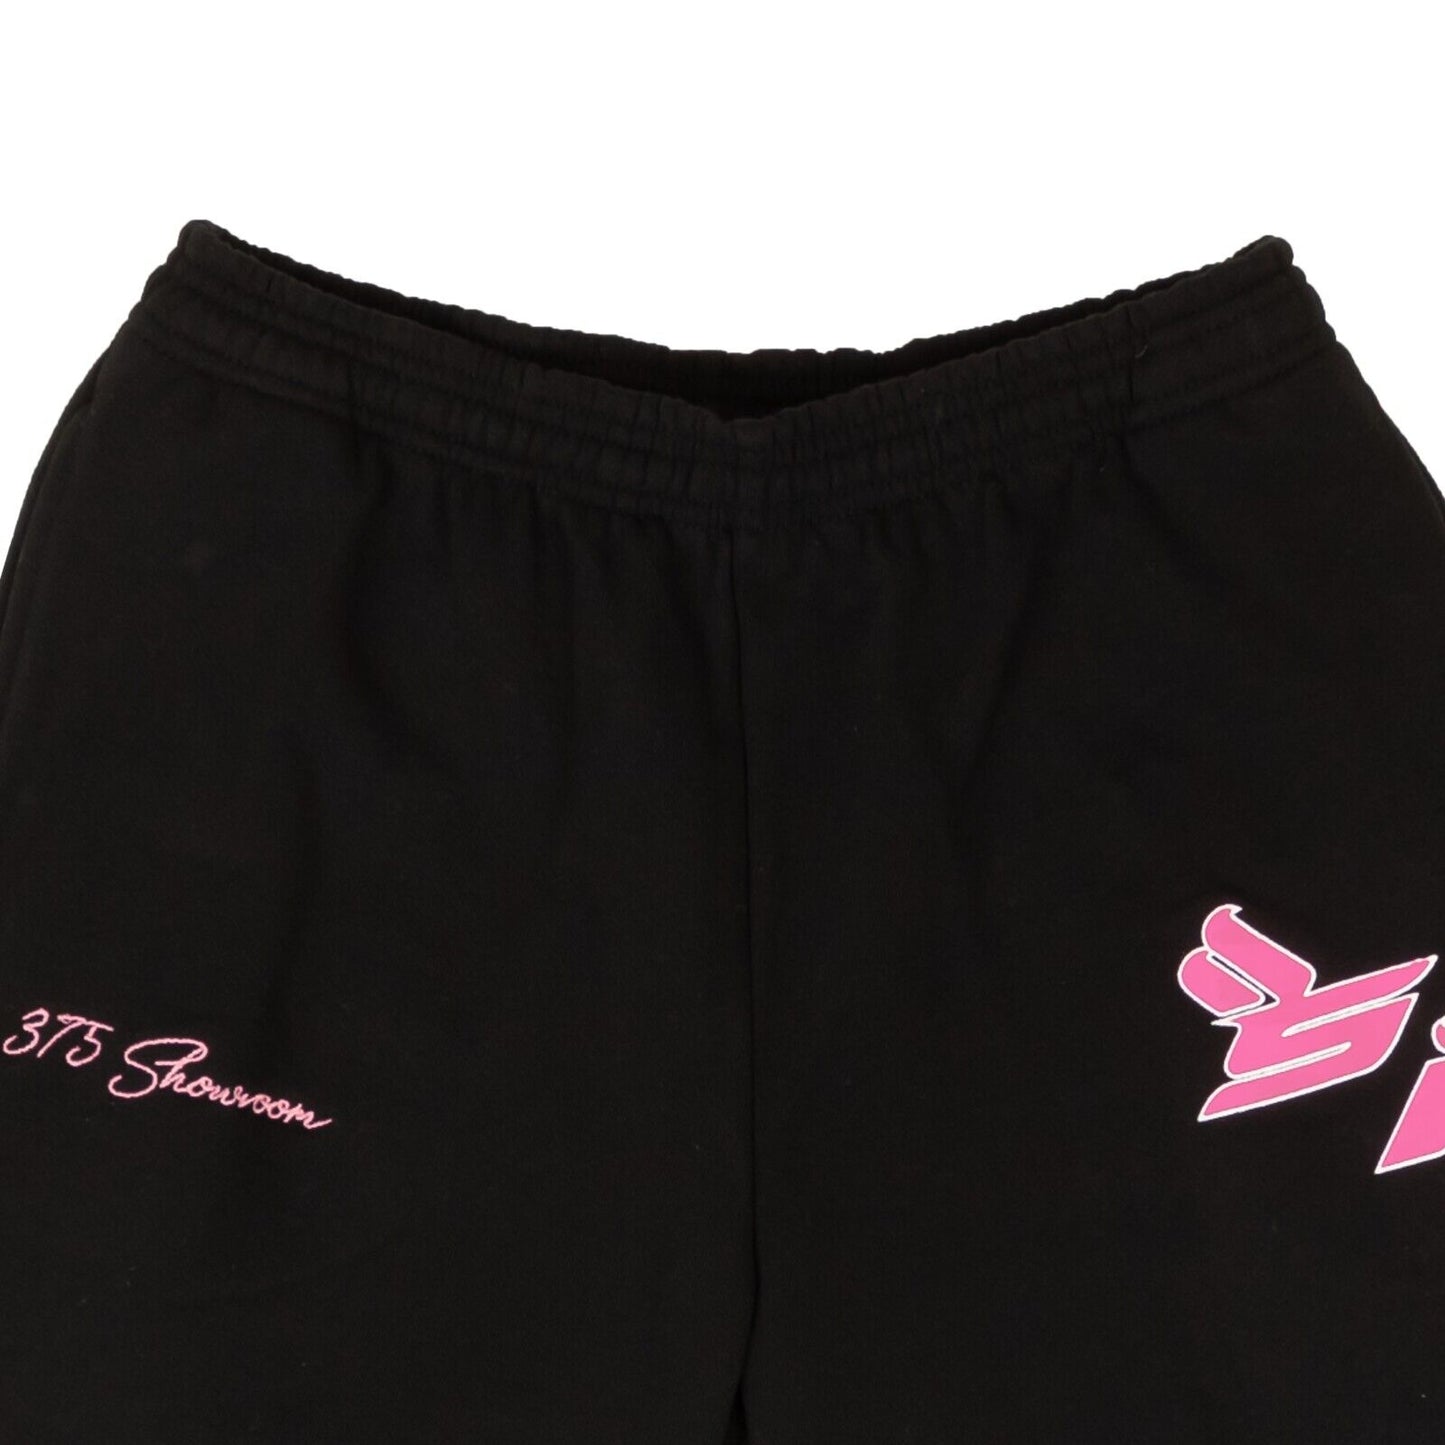 Sicko X 375 375 Logo Sweatshorts - Black/Pink